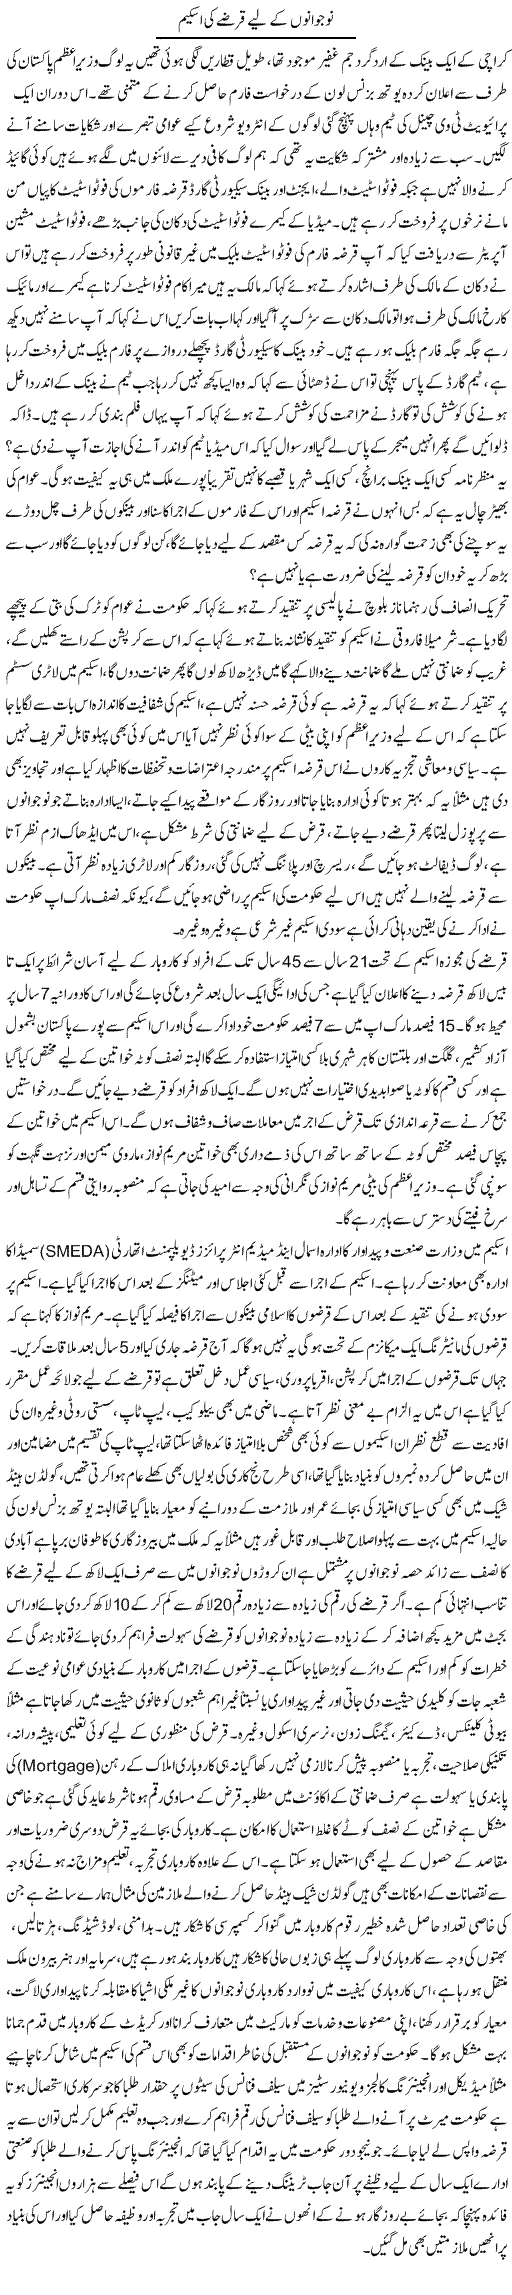 Nojawano K Lie Qarze Ki Scheame | Adnan Ashraf | Daily Urdu Columns